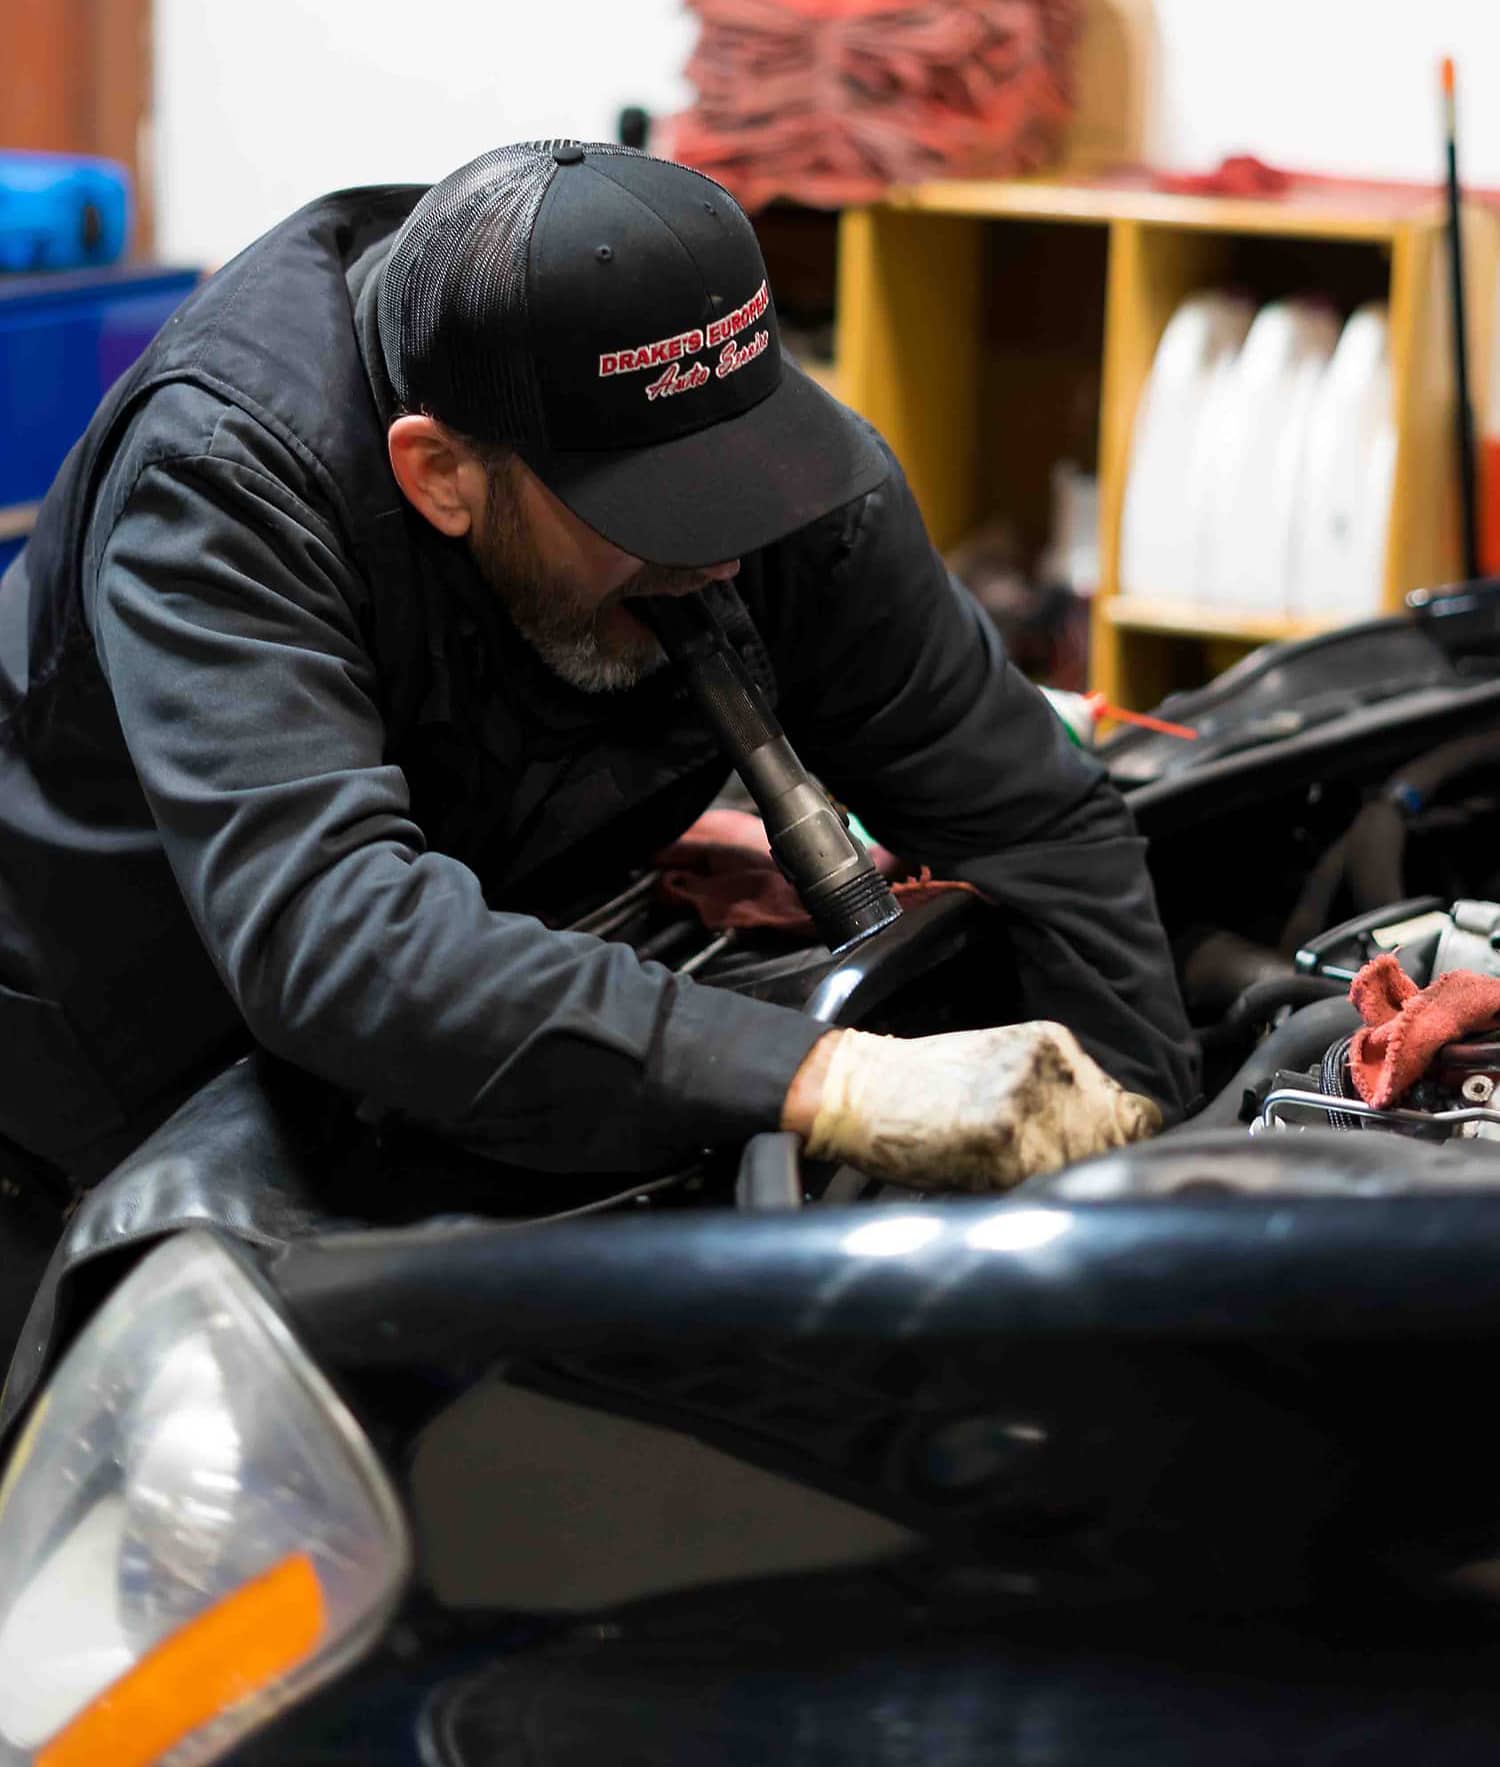 Drakes European Auto Service - European Auto Repairs in Northern CA